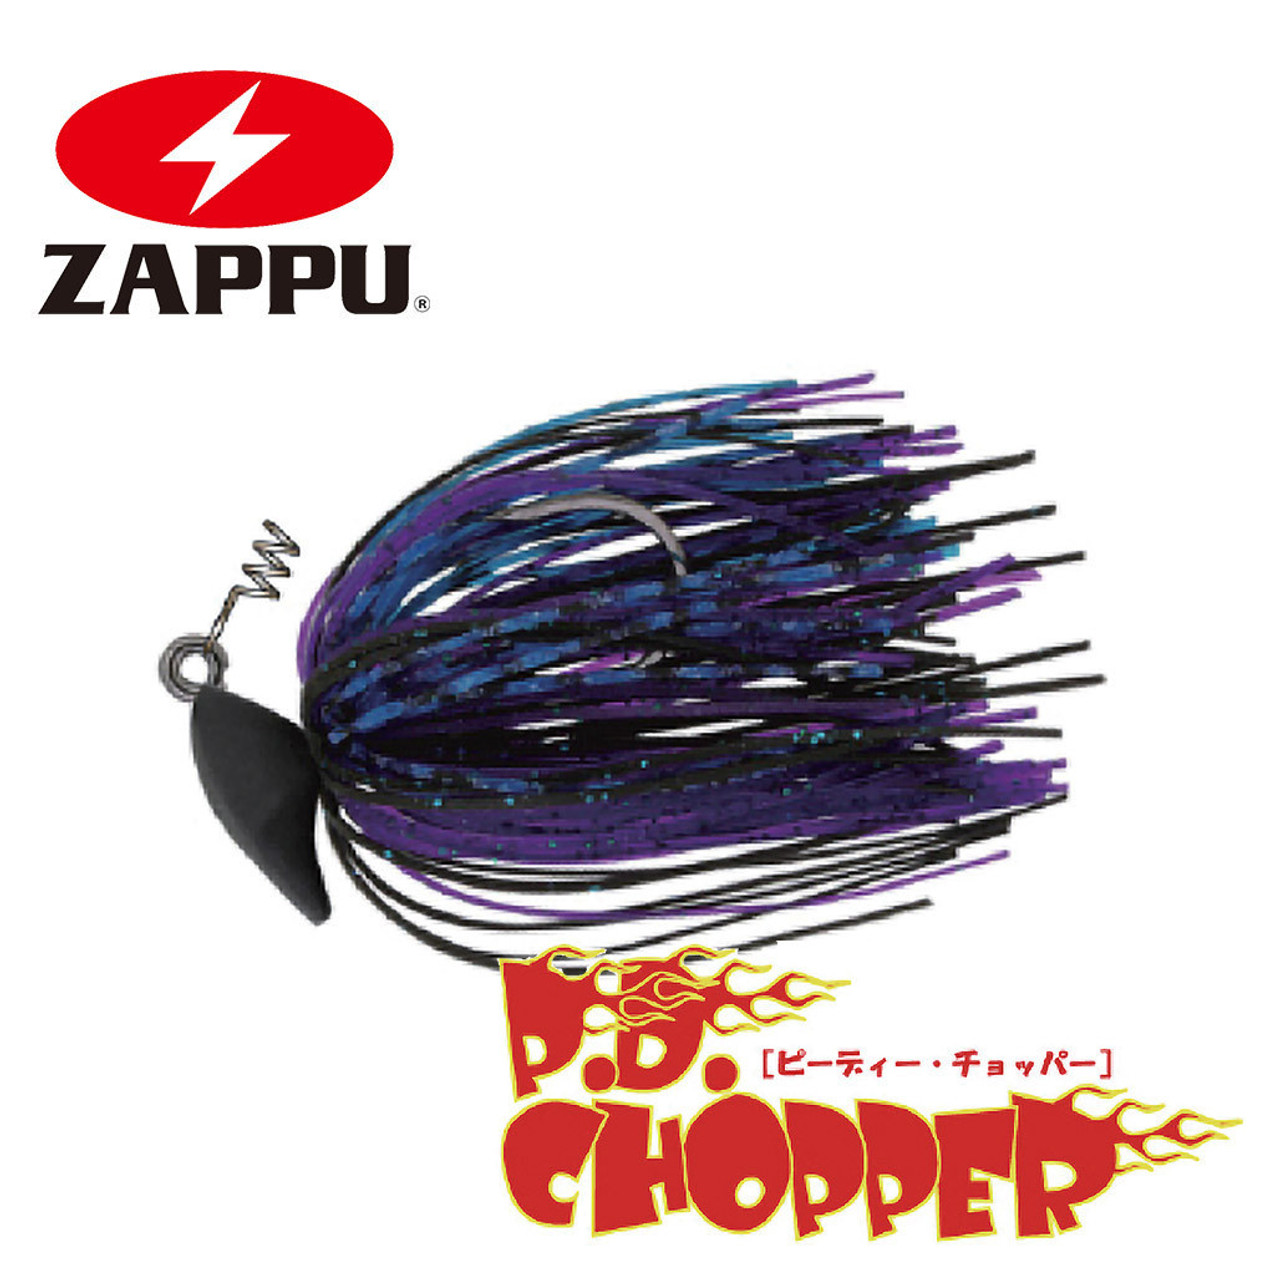 ZAPPU P.D.CHOPPER 1/2 oz NEW - KKJAPANLURE